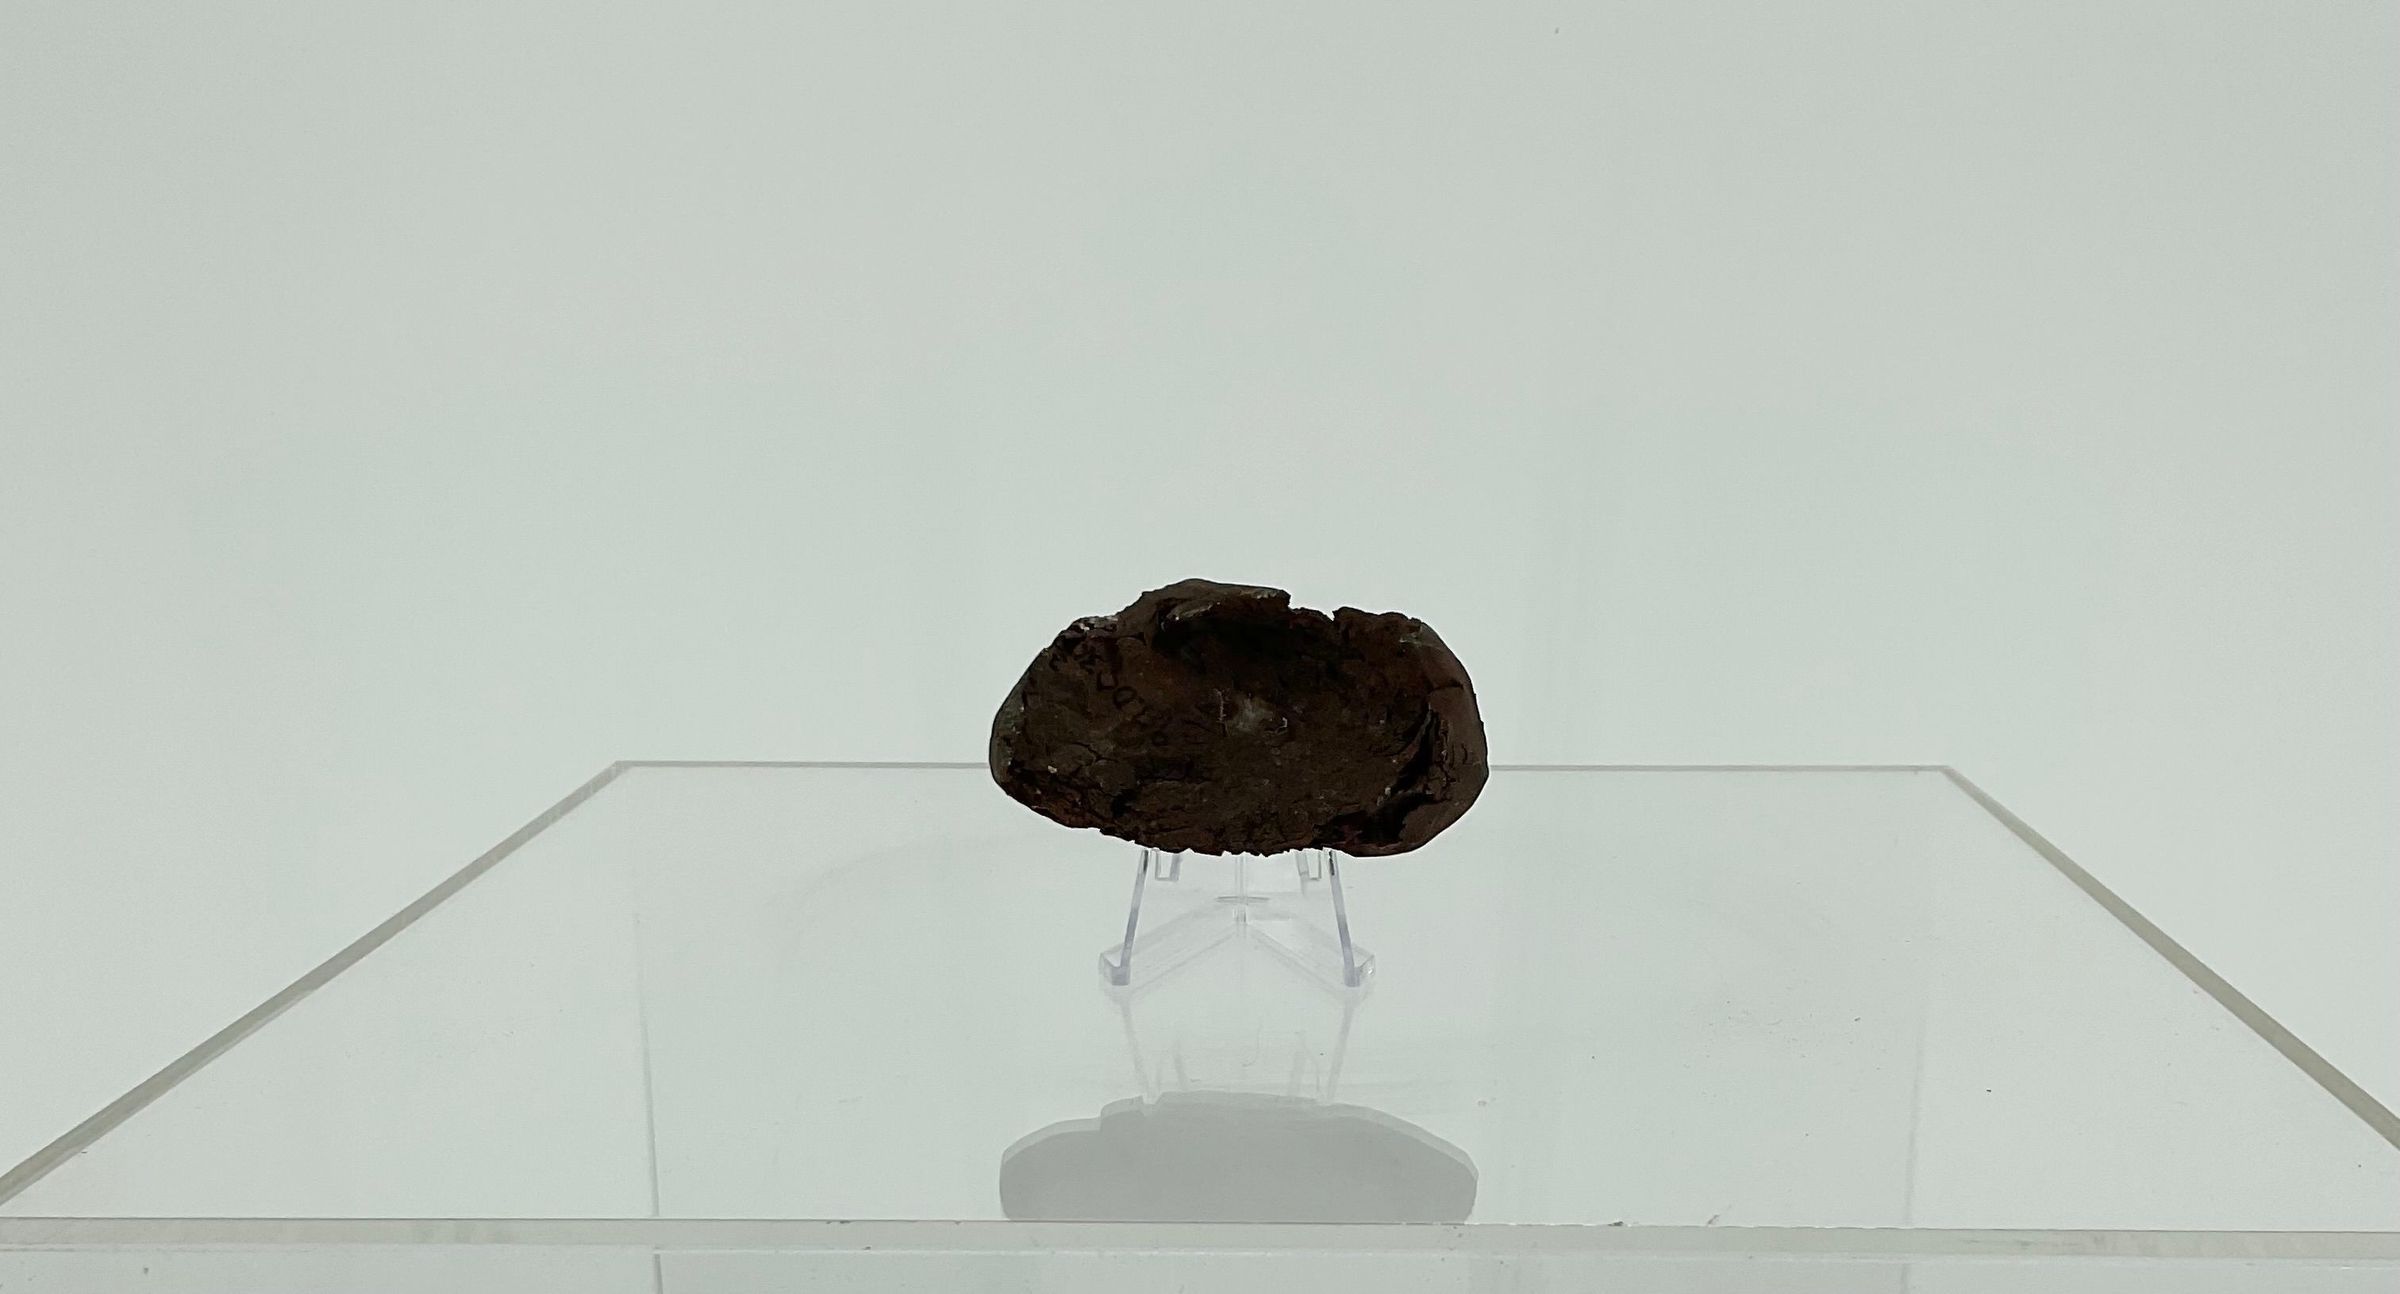 Primary Image of Japanese Bomb Fragment